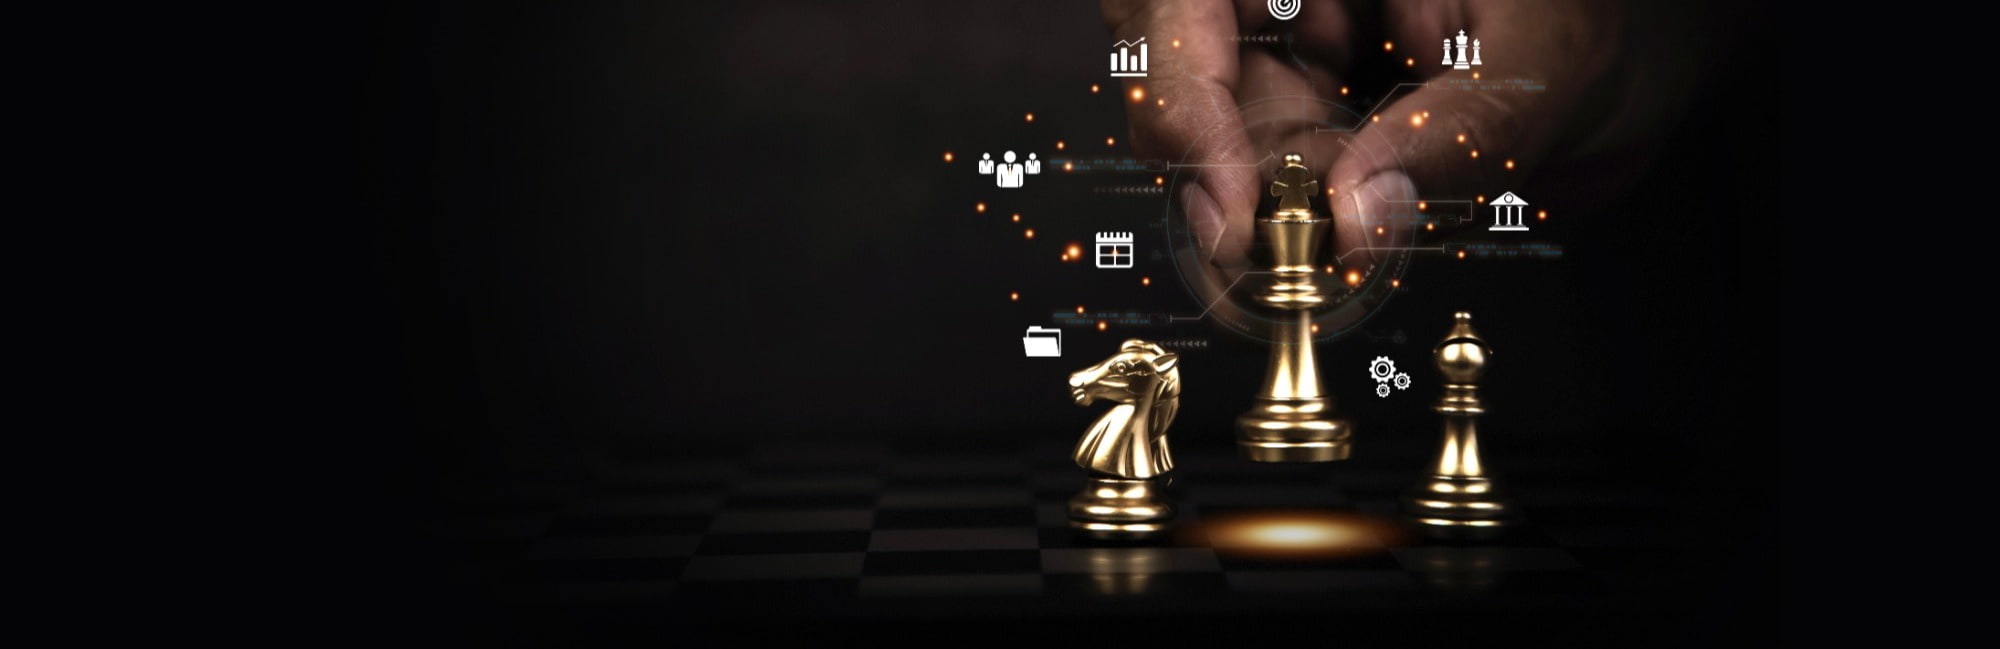 Digital chess